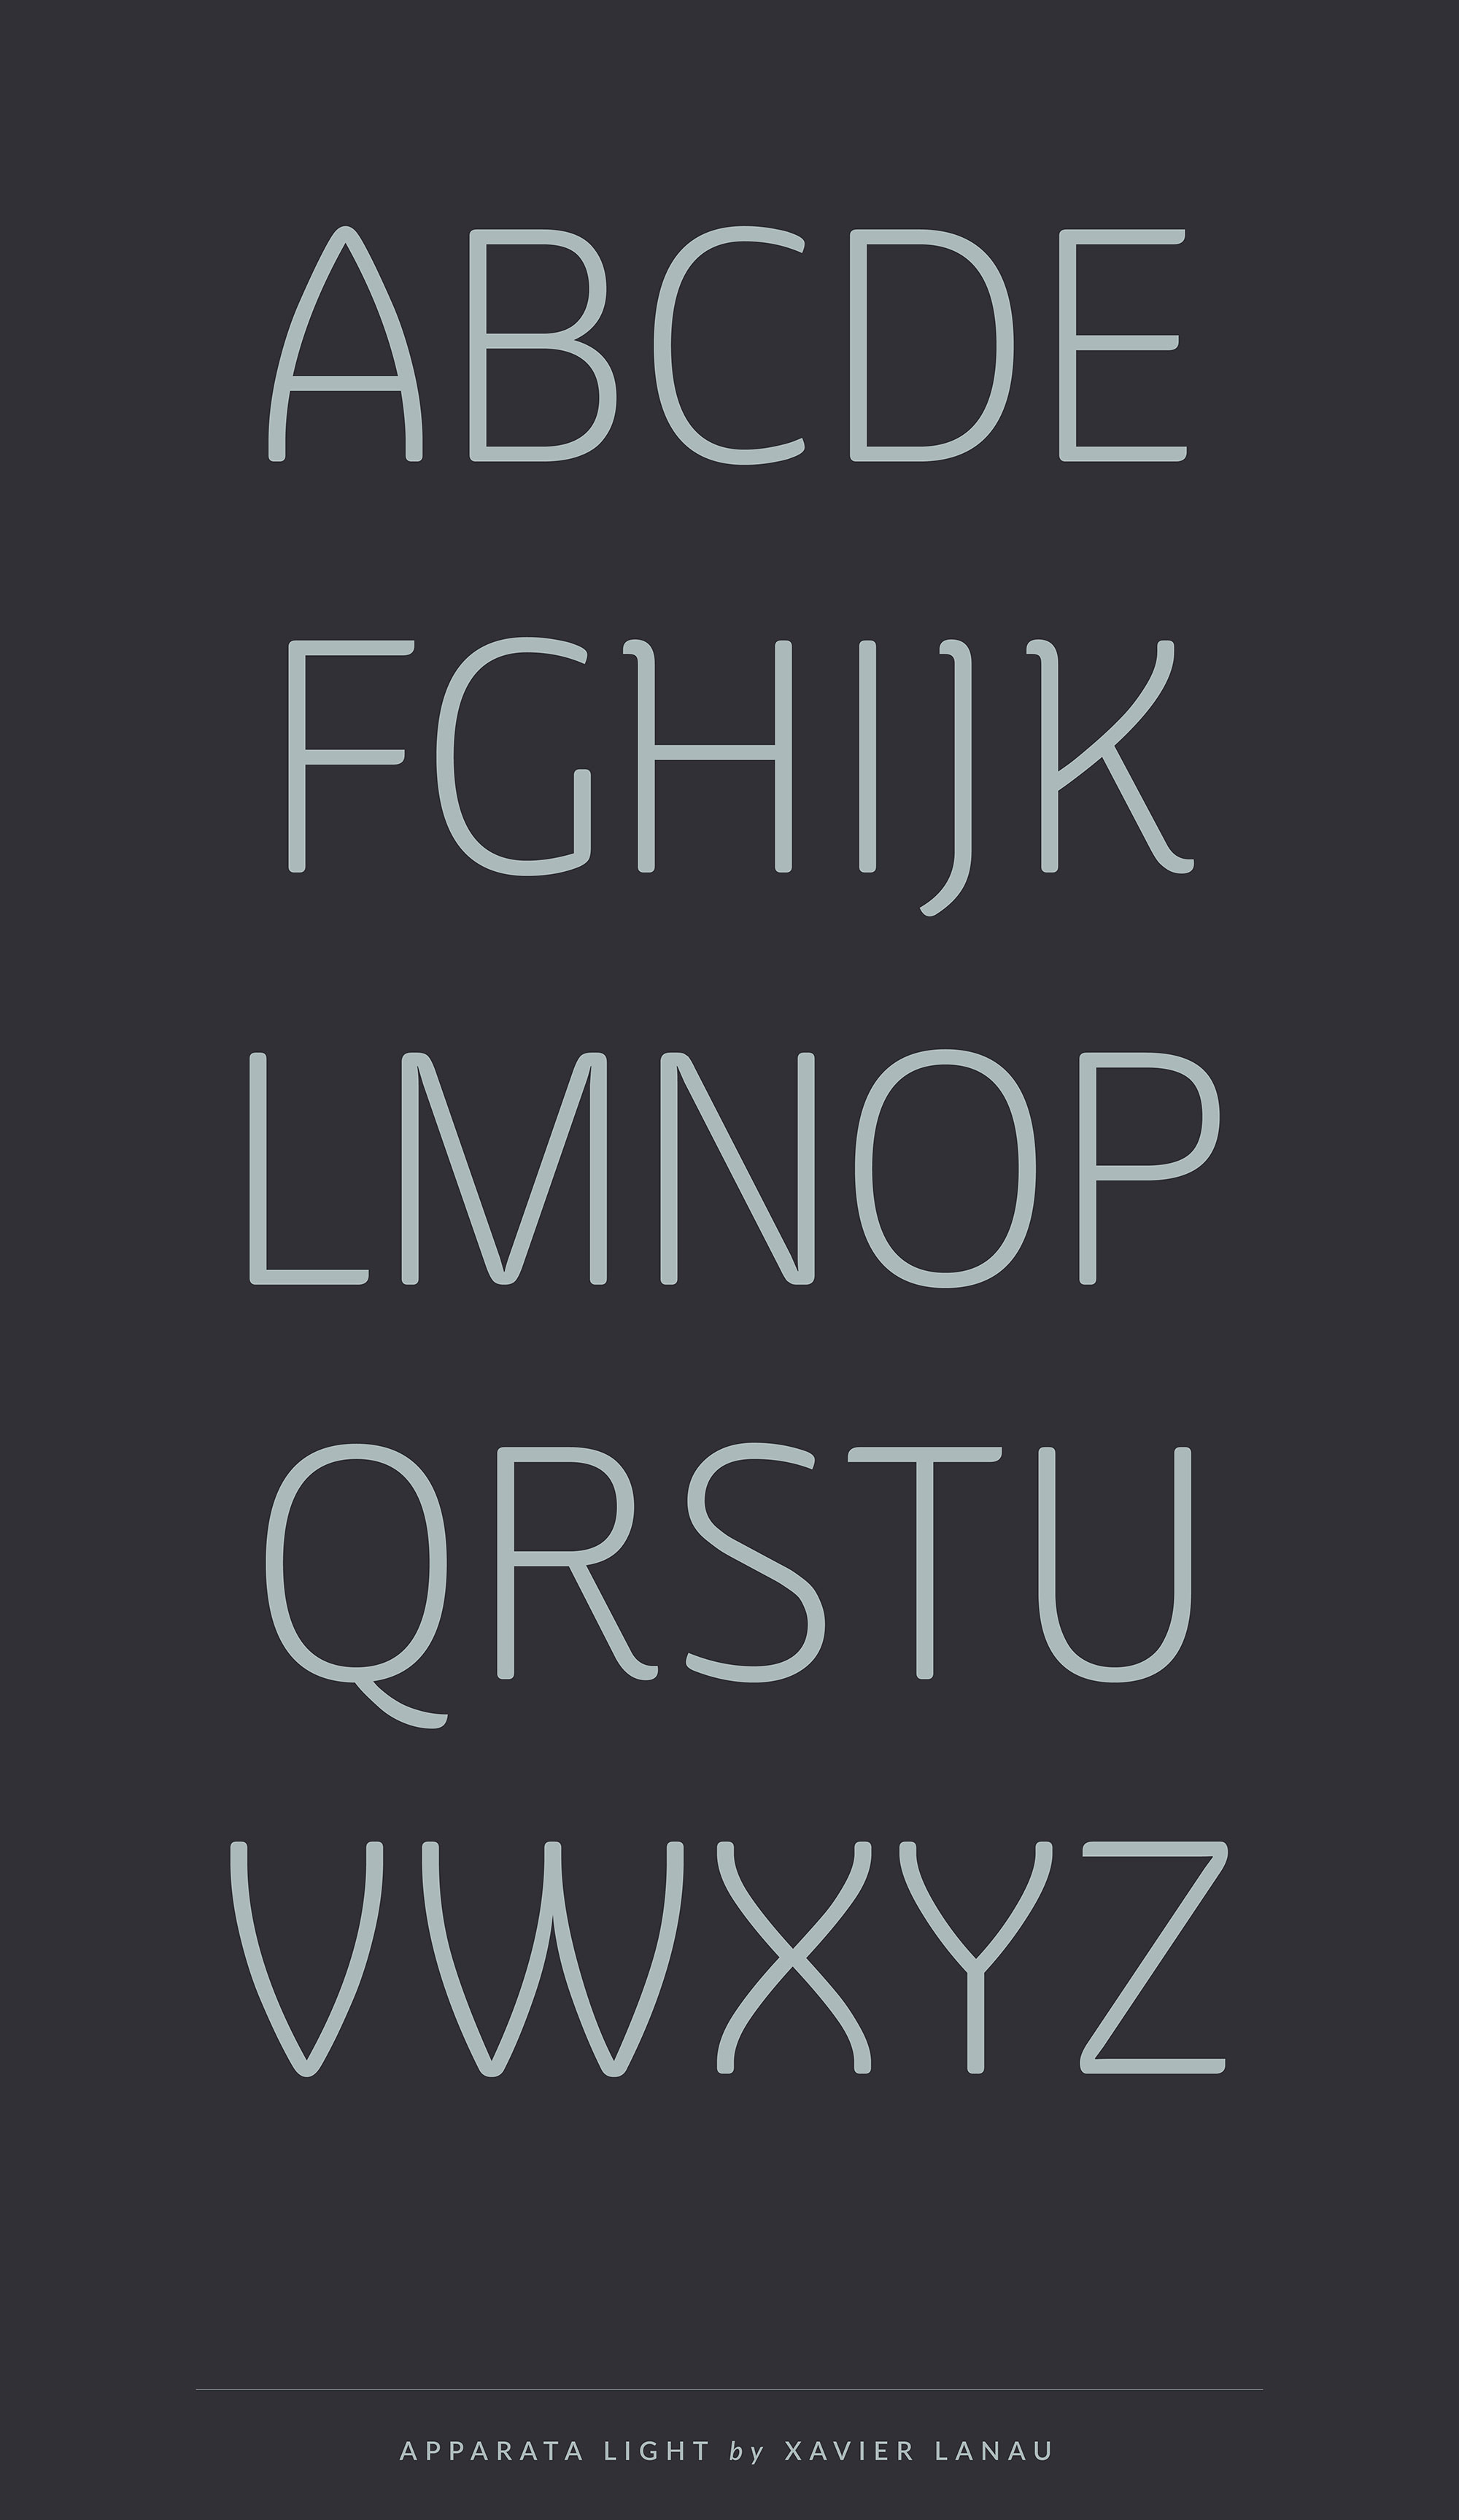 Apparata Typeface by Xavier Lanau